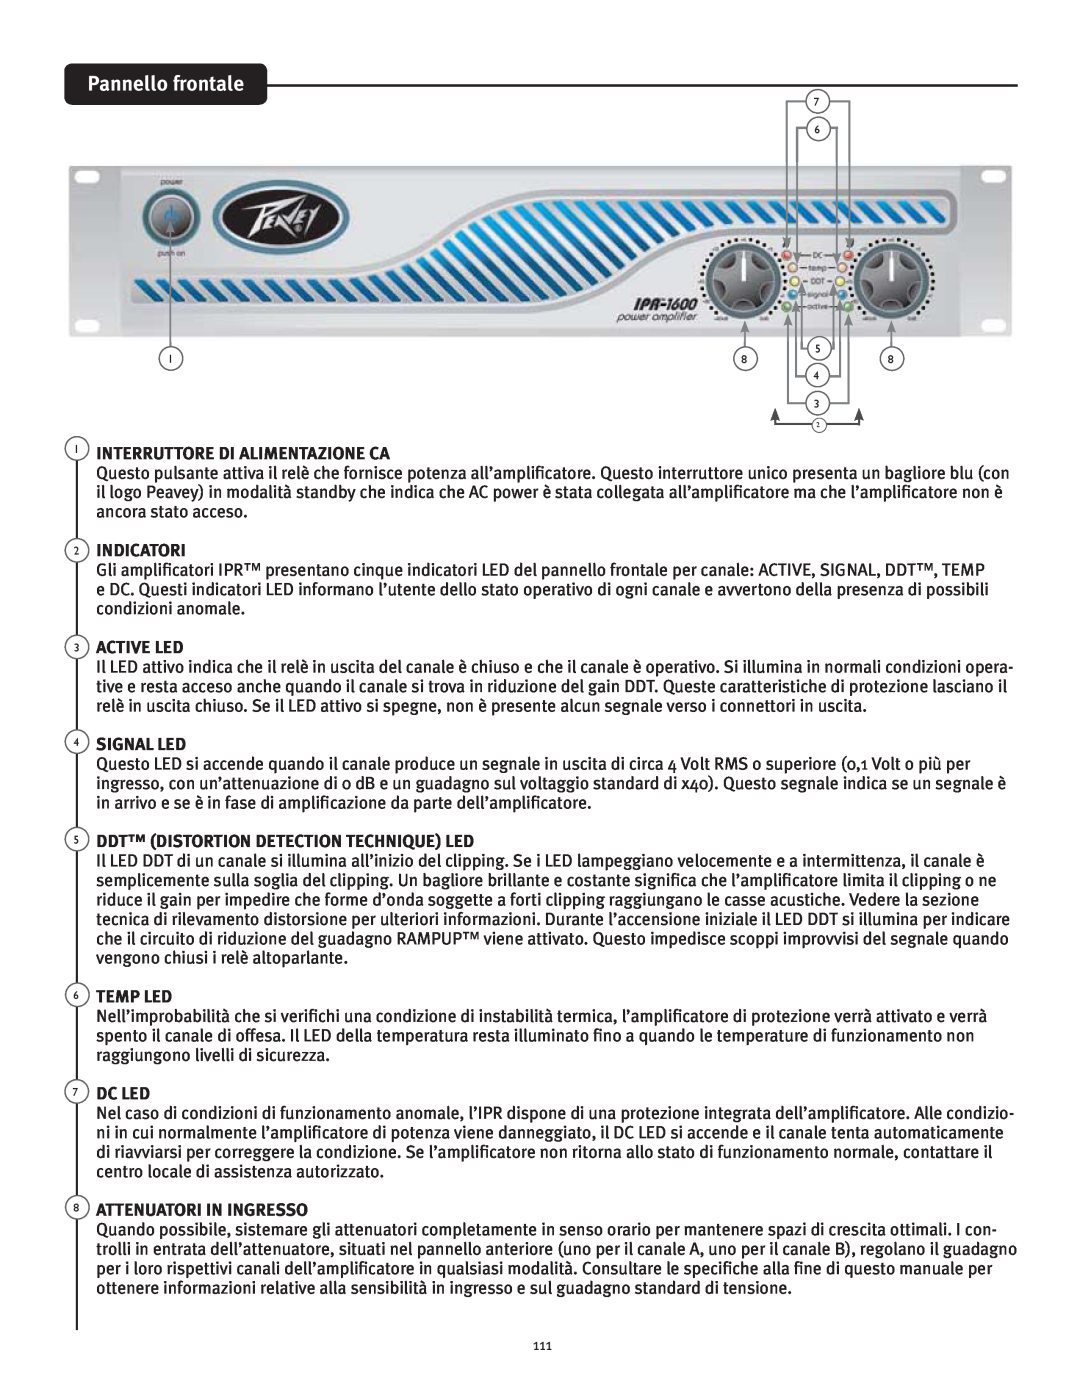 Peavey IPR 1600 Pannello frontale, Interruttore Di Alimentazione Ca, Indicatori, Active Led, Signal Led, Temp Led, Dc Led 